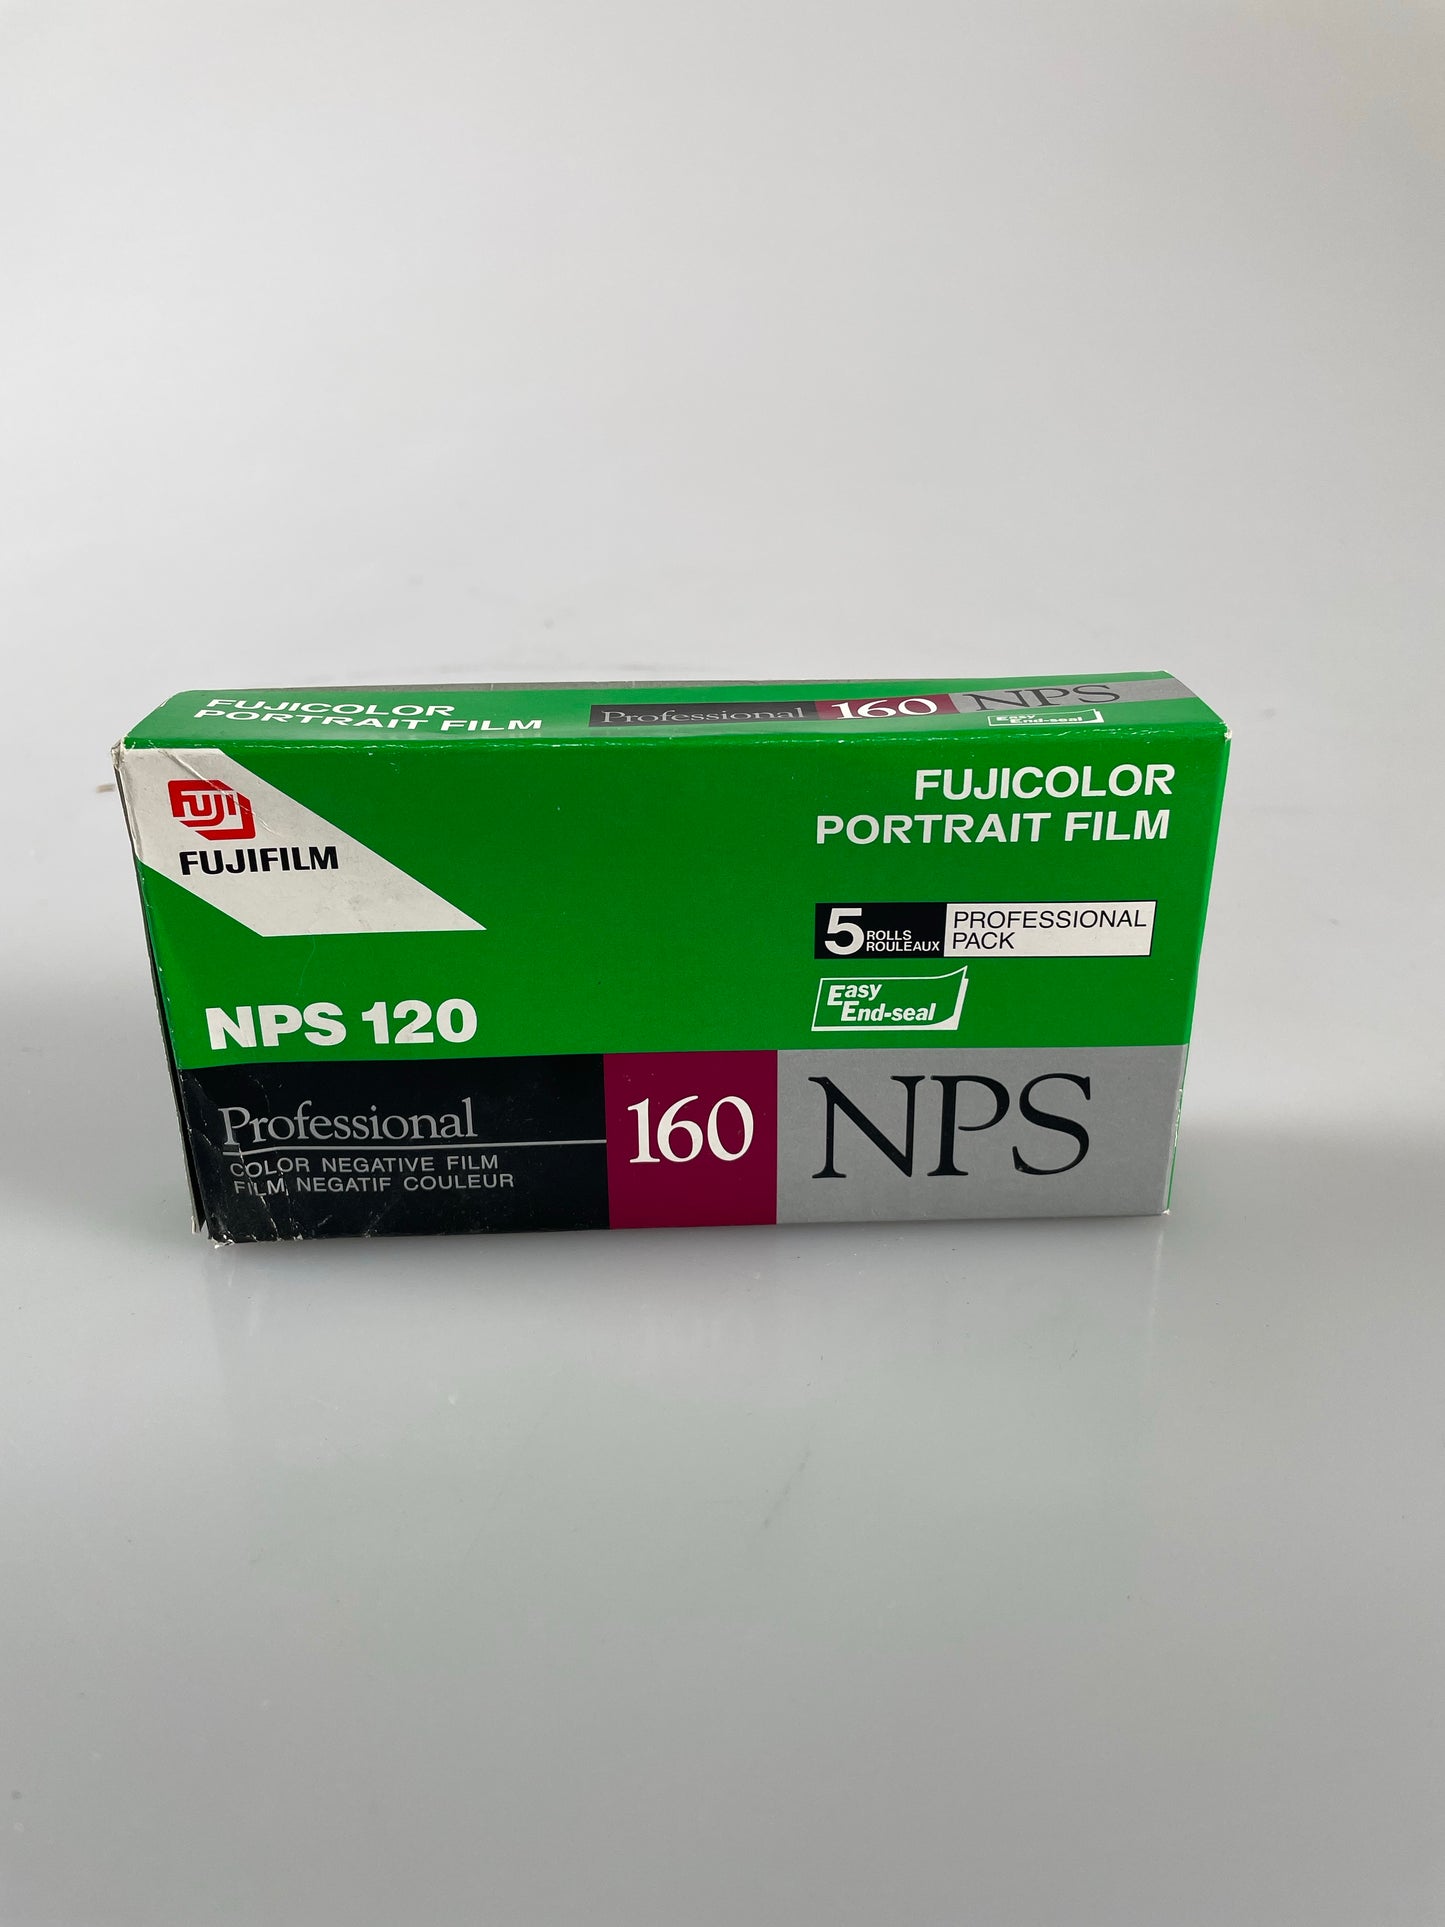 Fuji / Fujifilm NPS 160 120 pro pack 5 roll Color Negative Film